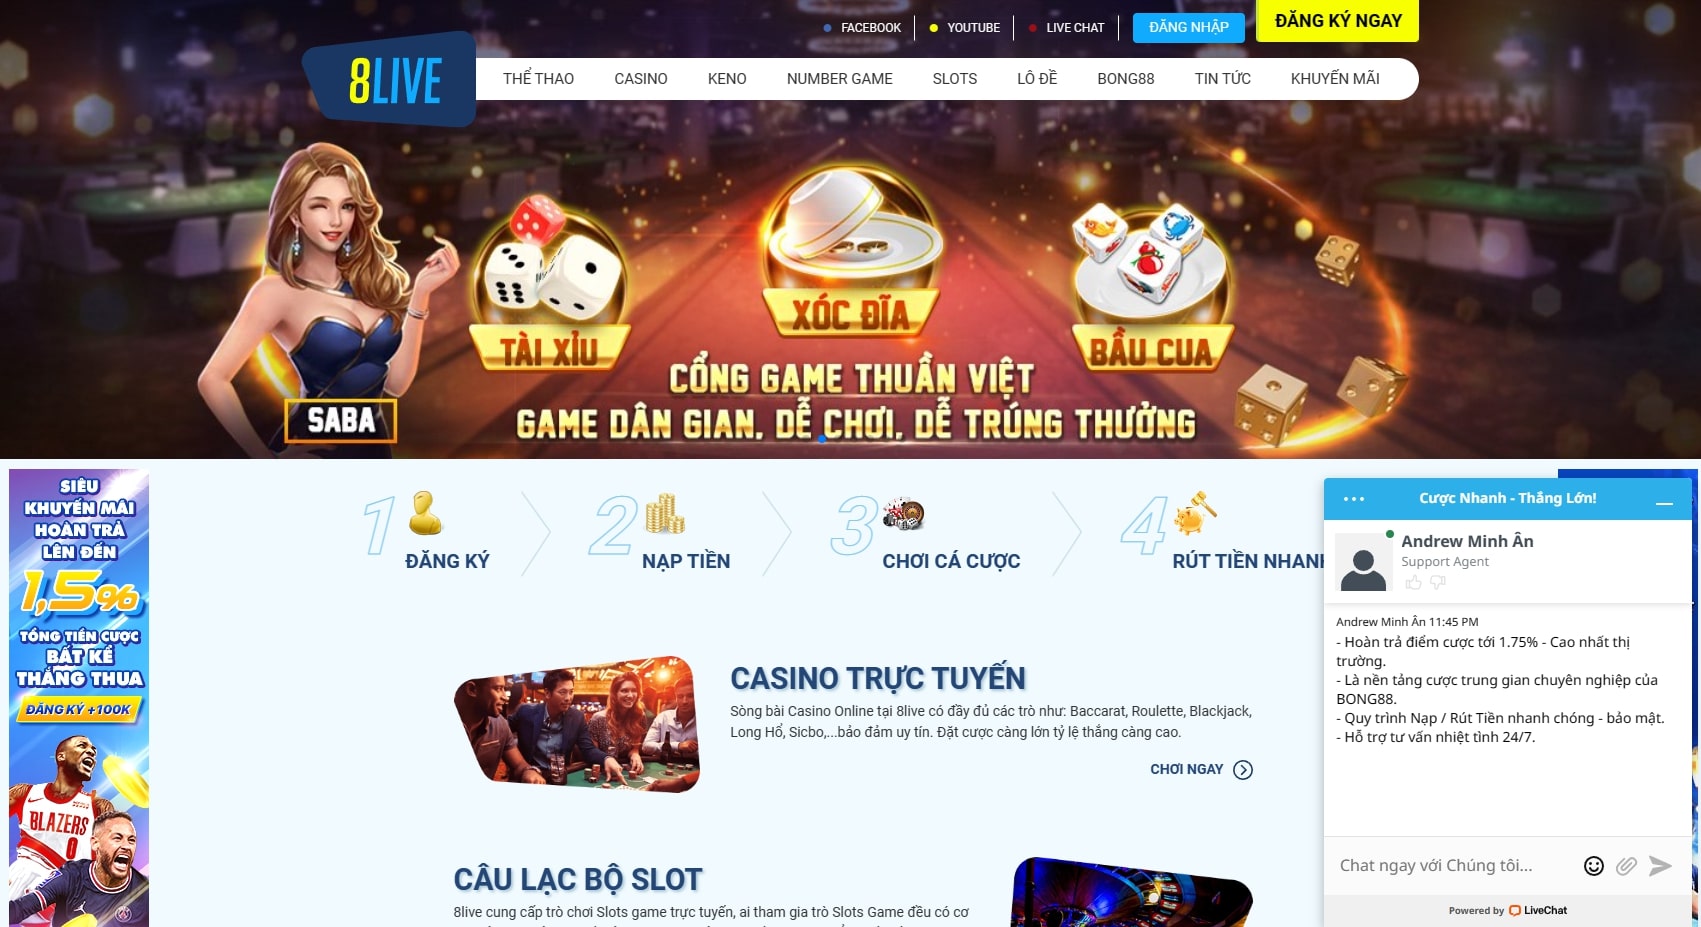 Giao diện website đẹp mắt của 8Live